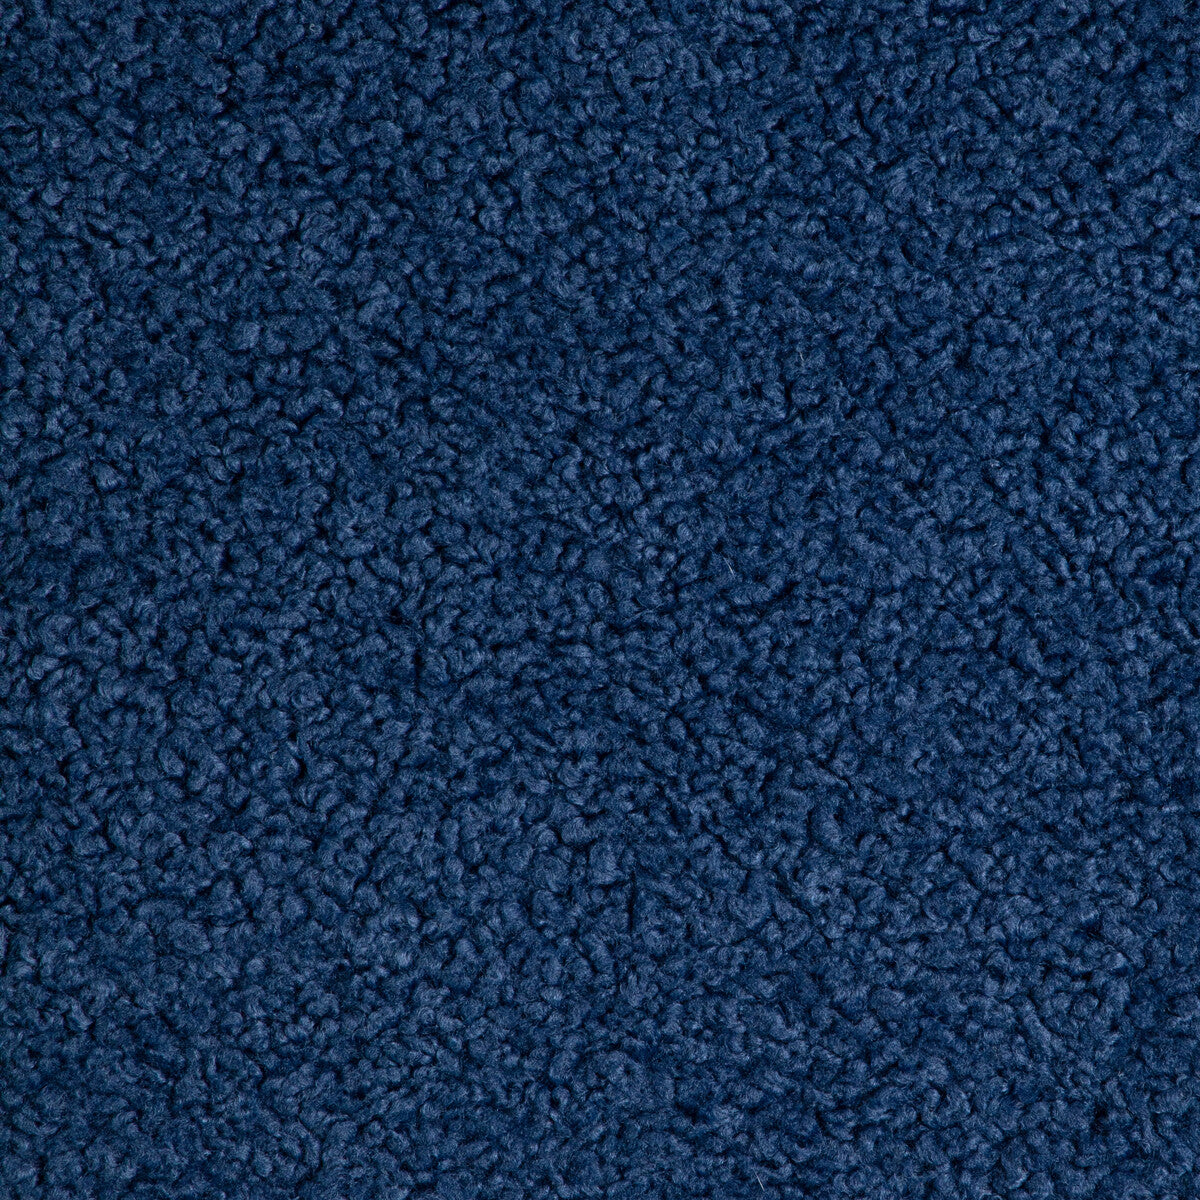 Kravet Smart fabric in 36986-50 color - pattern 36986.50.0 - by Kravet Smart